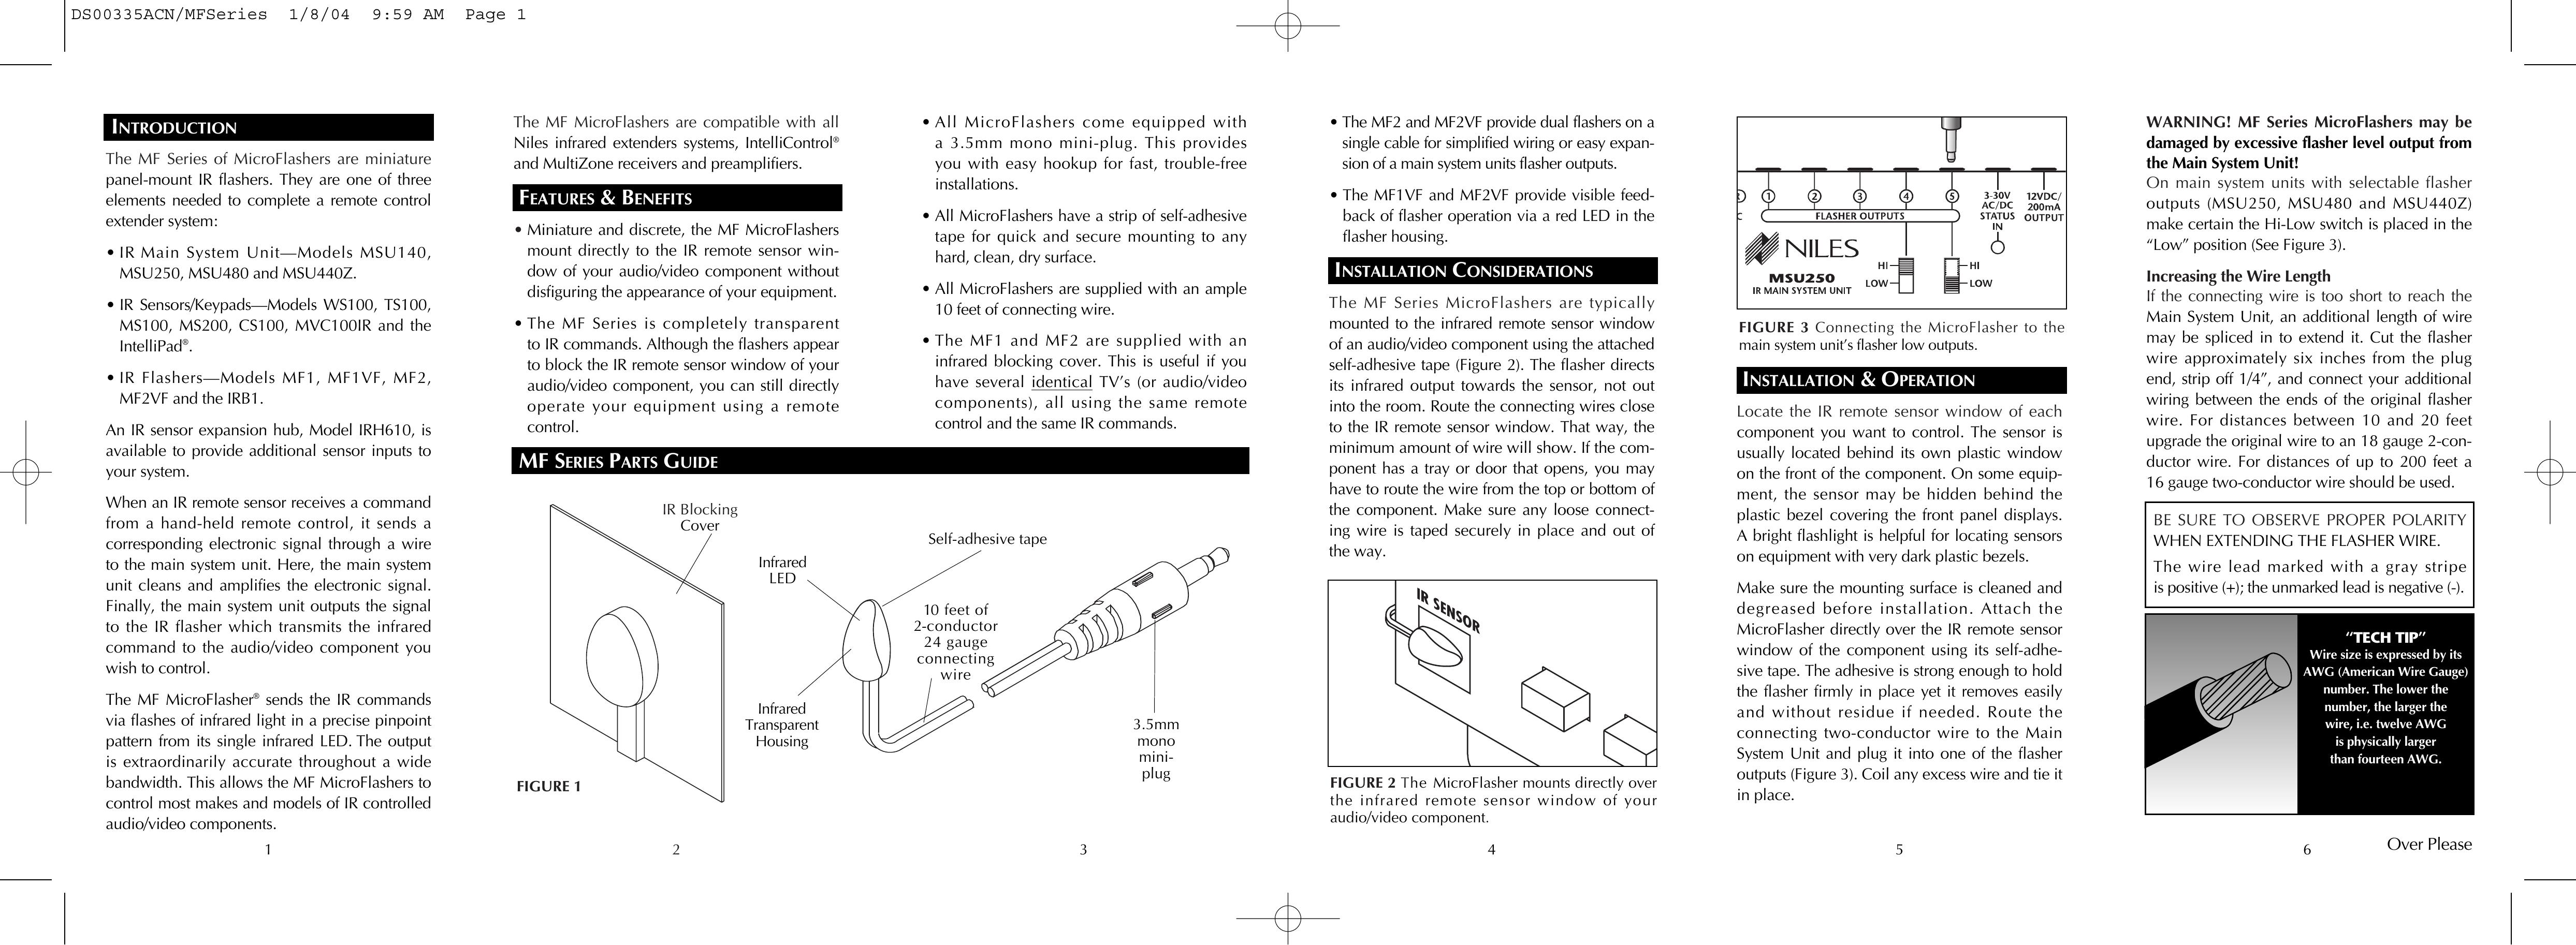 Niles Audio MSU140 Microscope & Magnifier User Manual